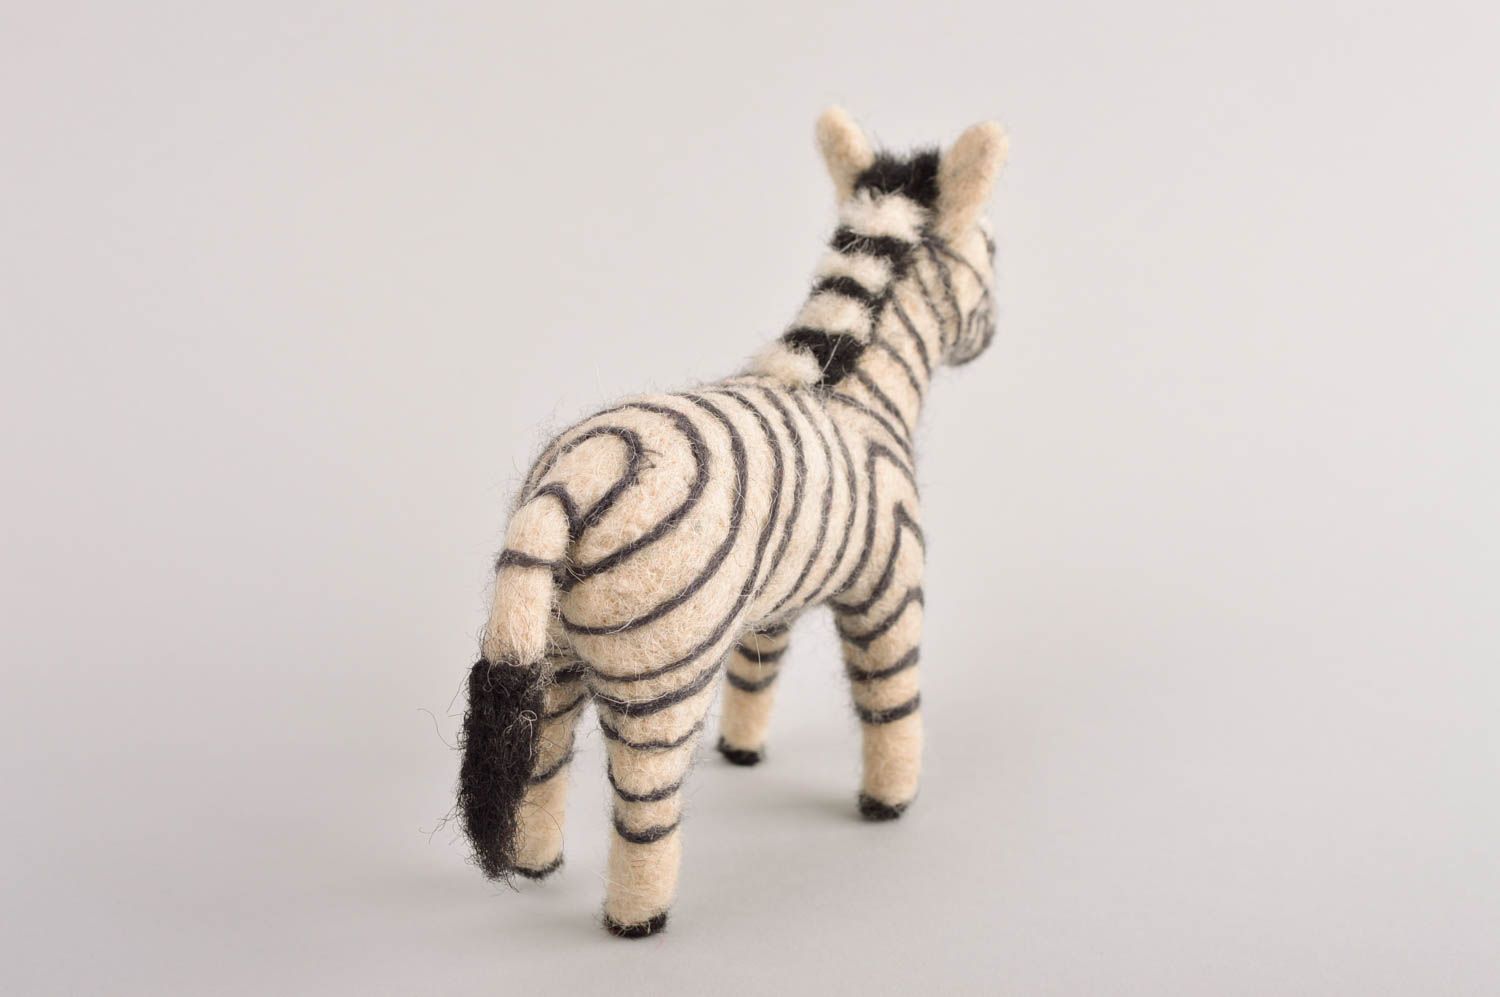 Handmade toy designer toy for baby nursery decor ideas woolen animal toy photo 4